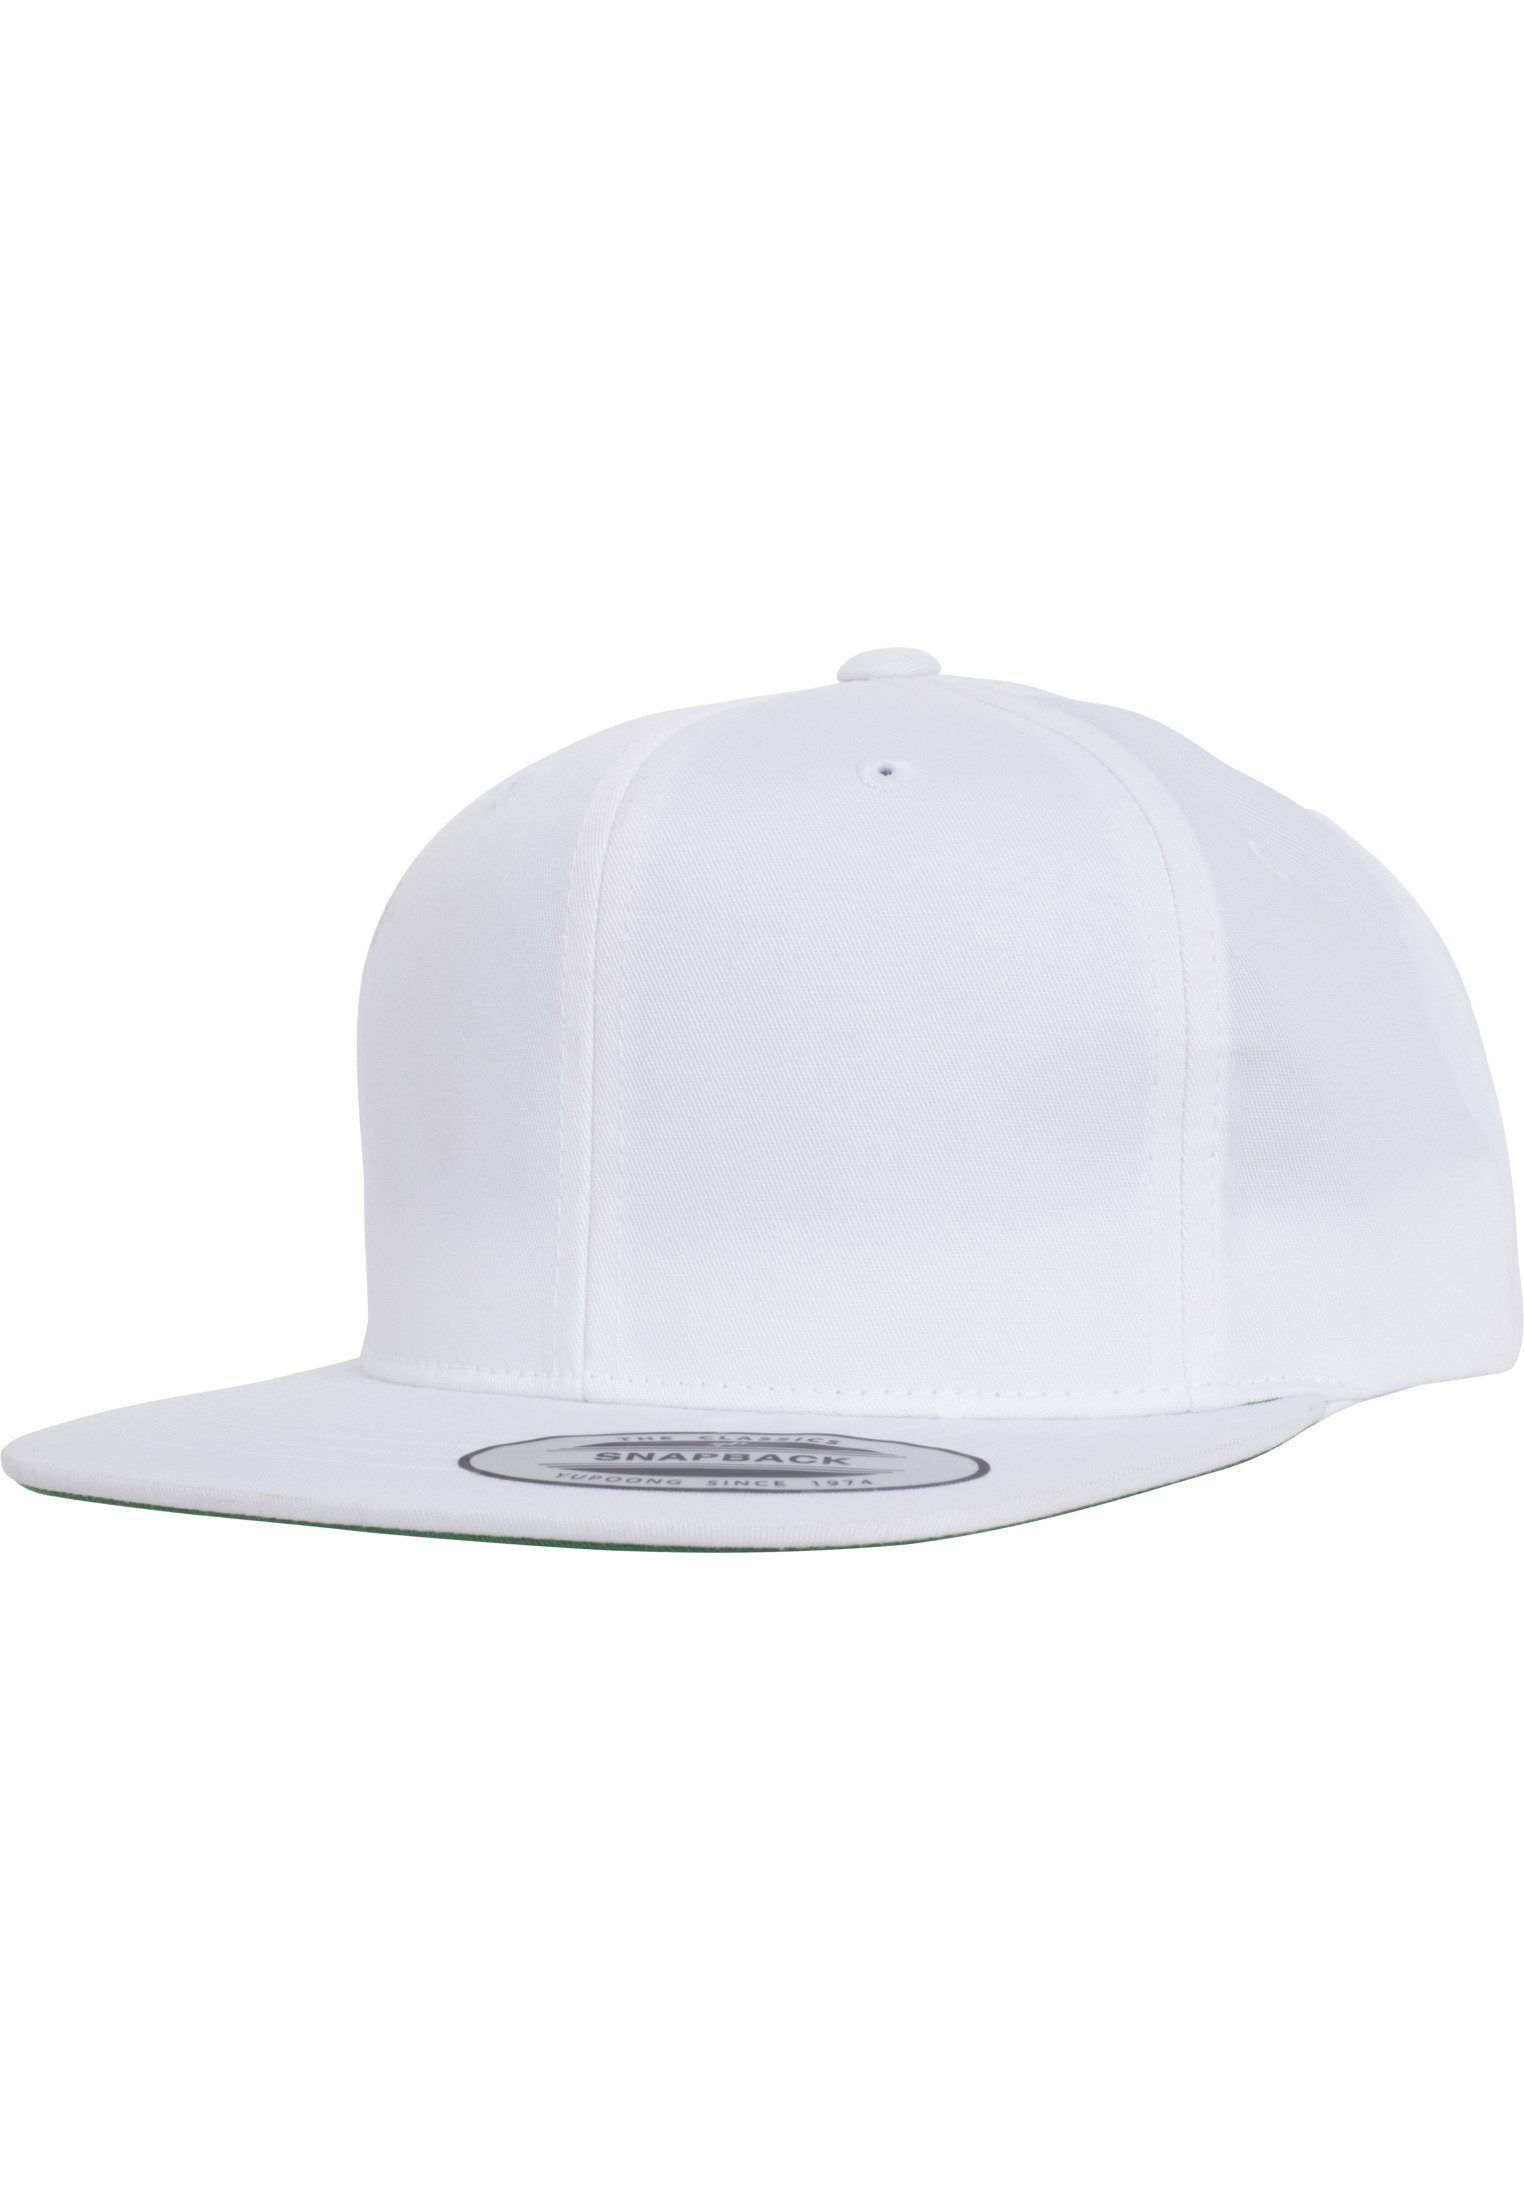 Flexfit Flex Cap Snapback Pro-Style Twill Snapback Youth Cap white | Flex Caps